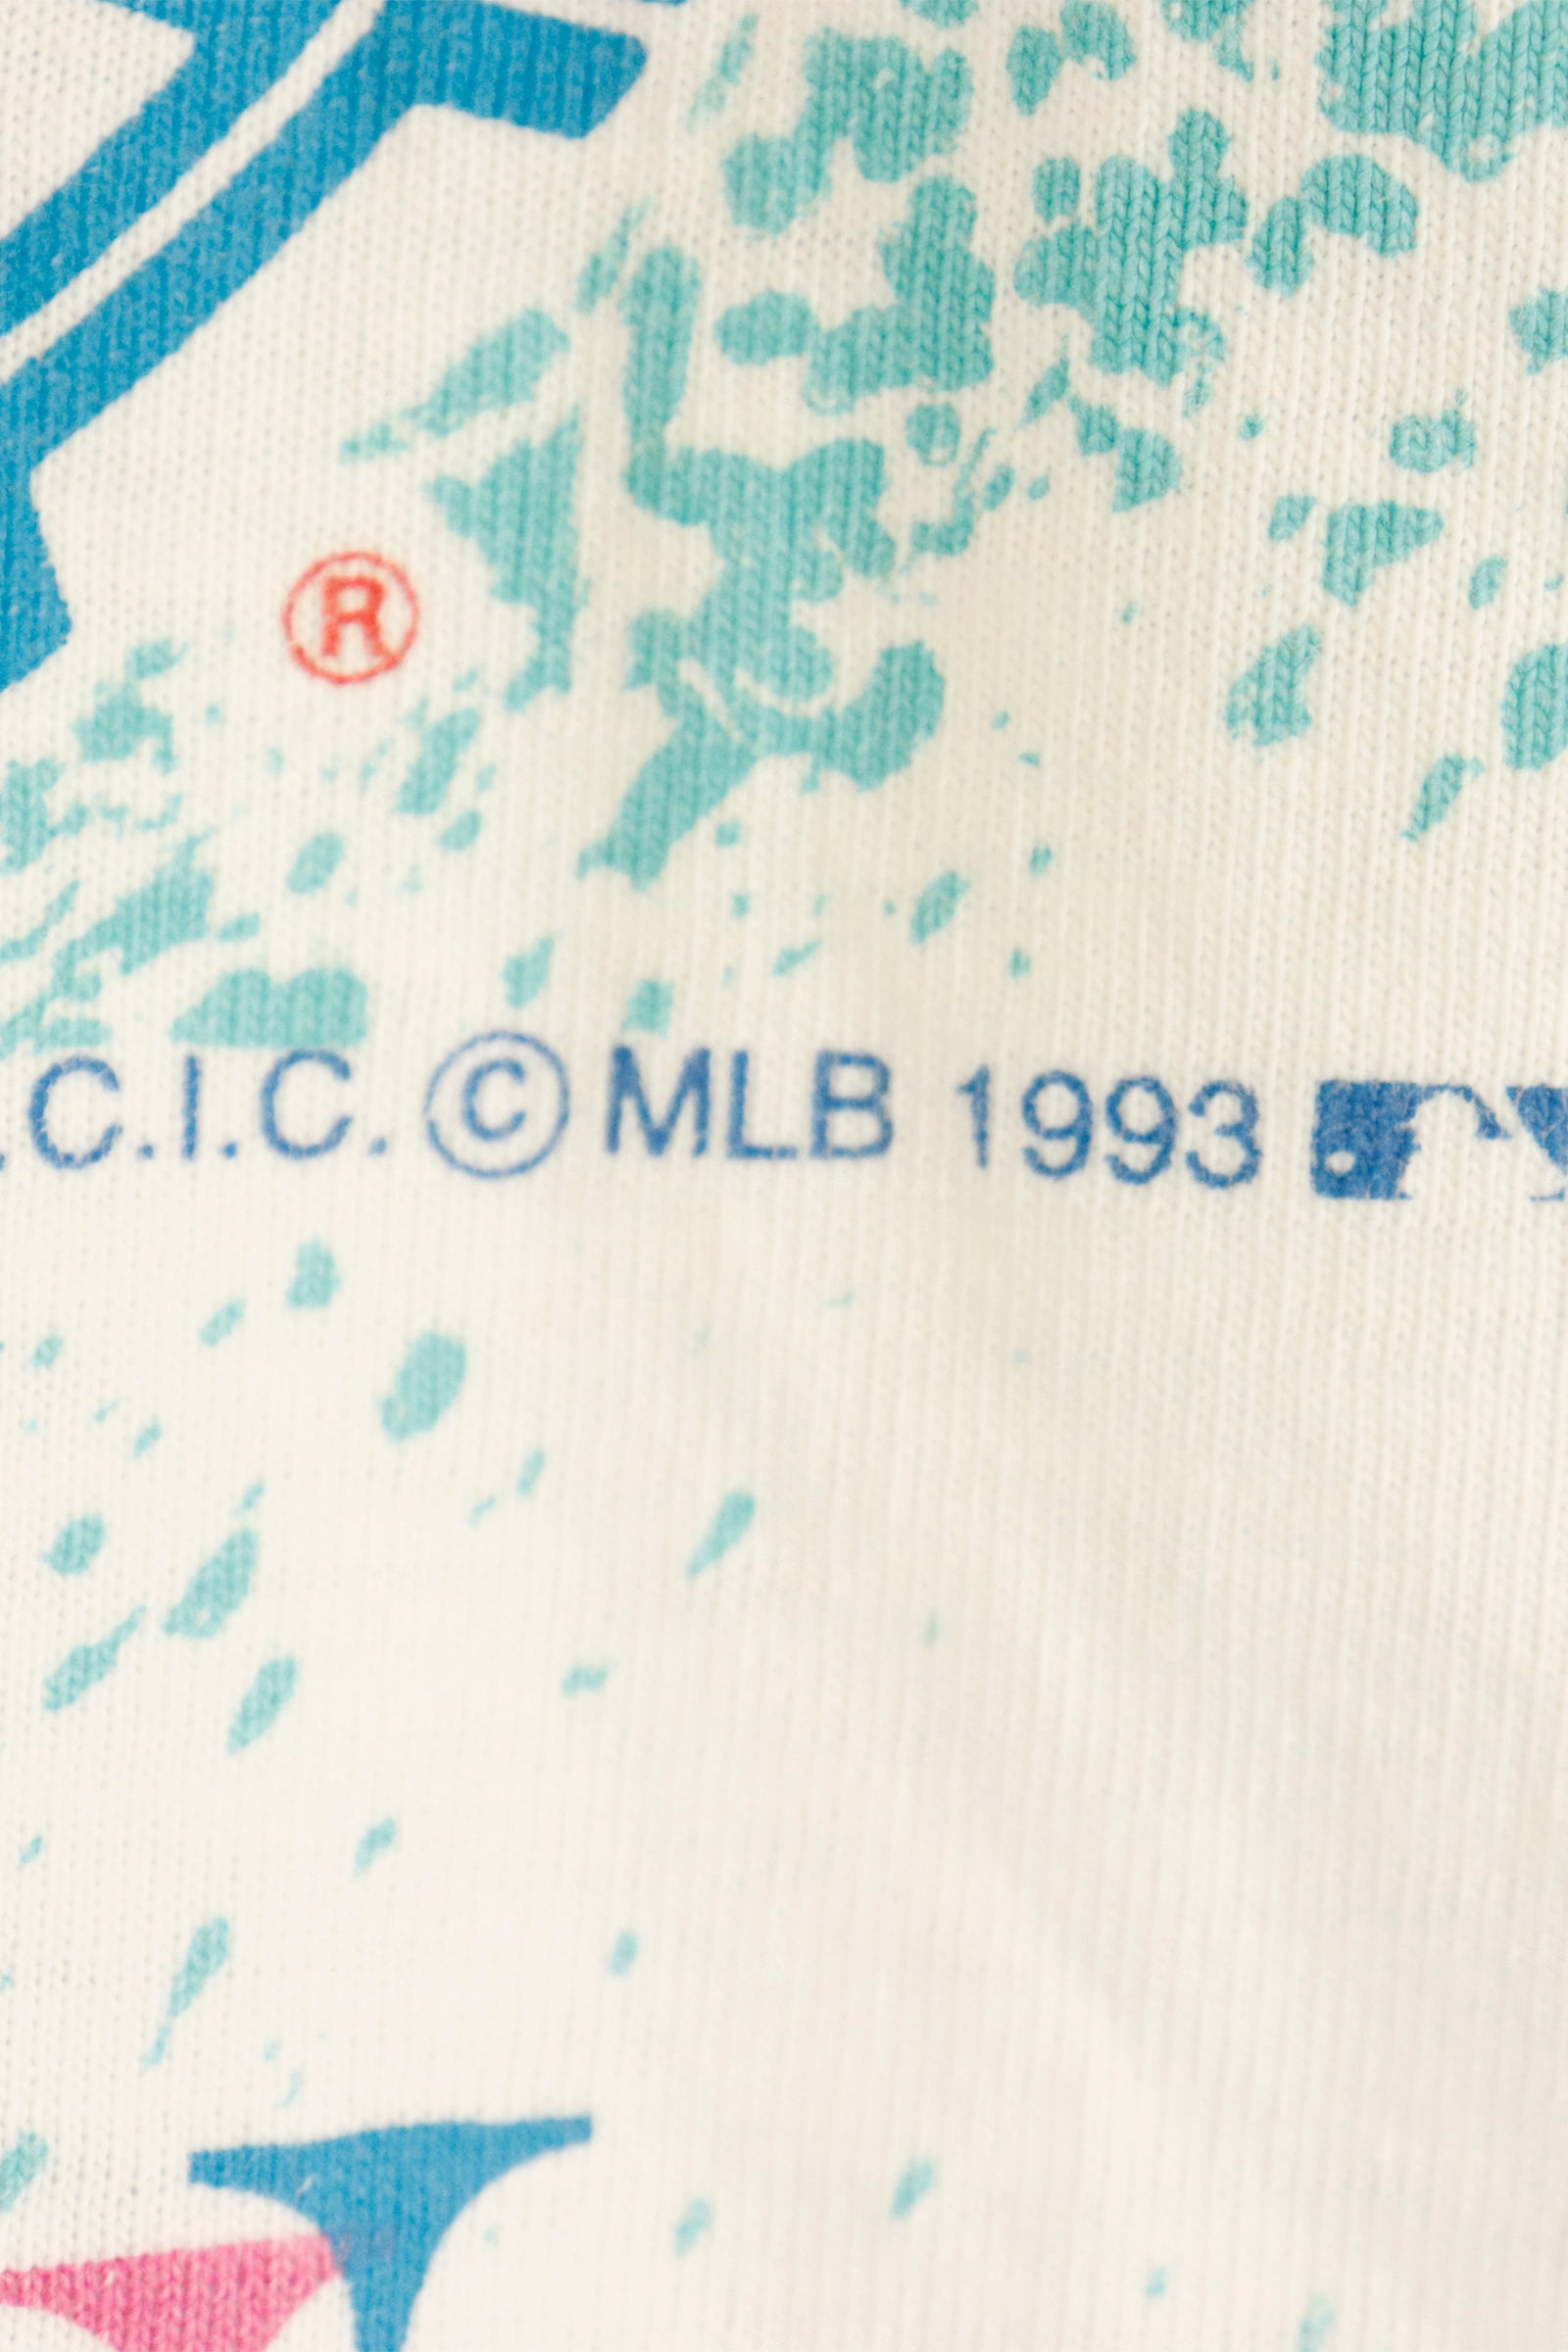 Vintage 1993 Toronto Blue Jays MLB Champions Front/Back Embossed Print T- Shirt 